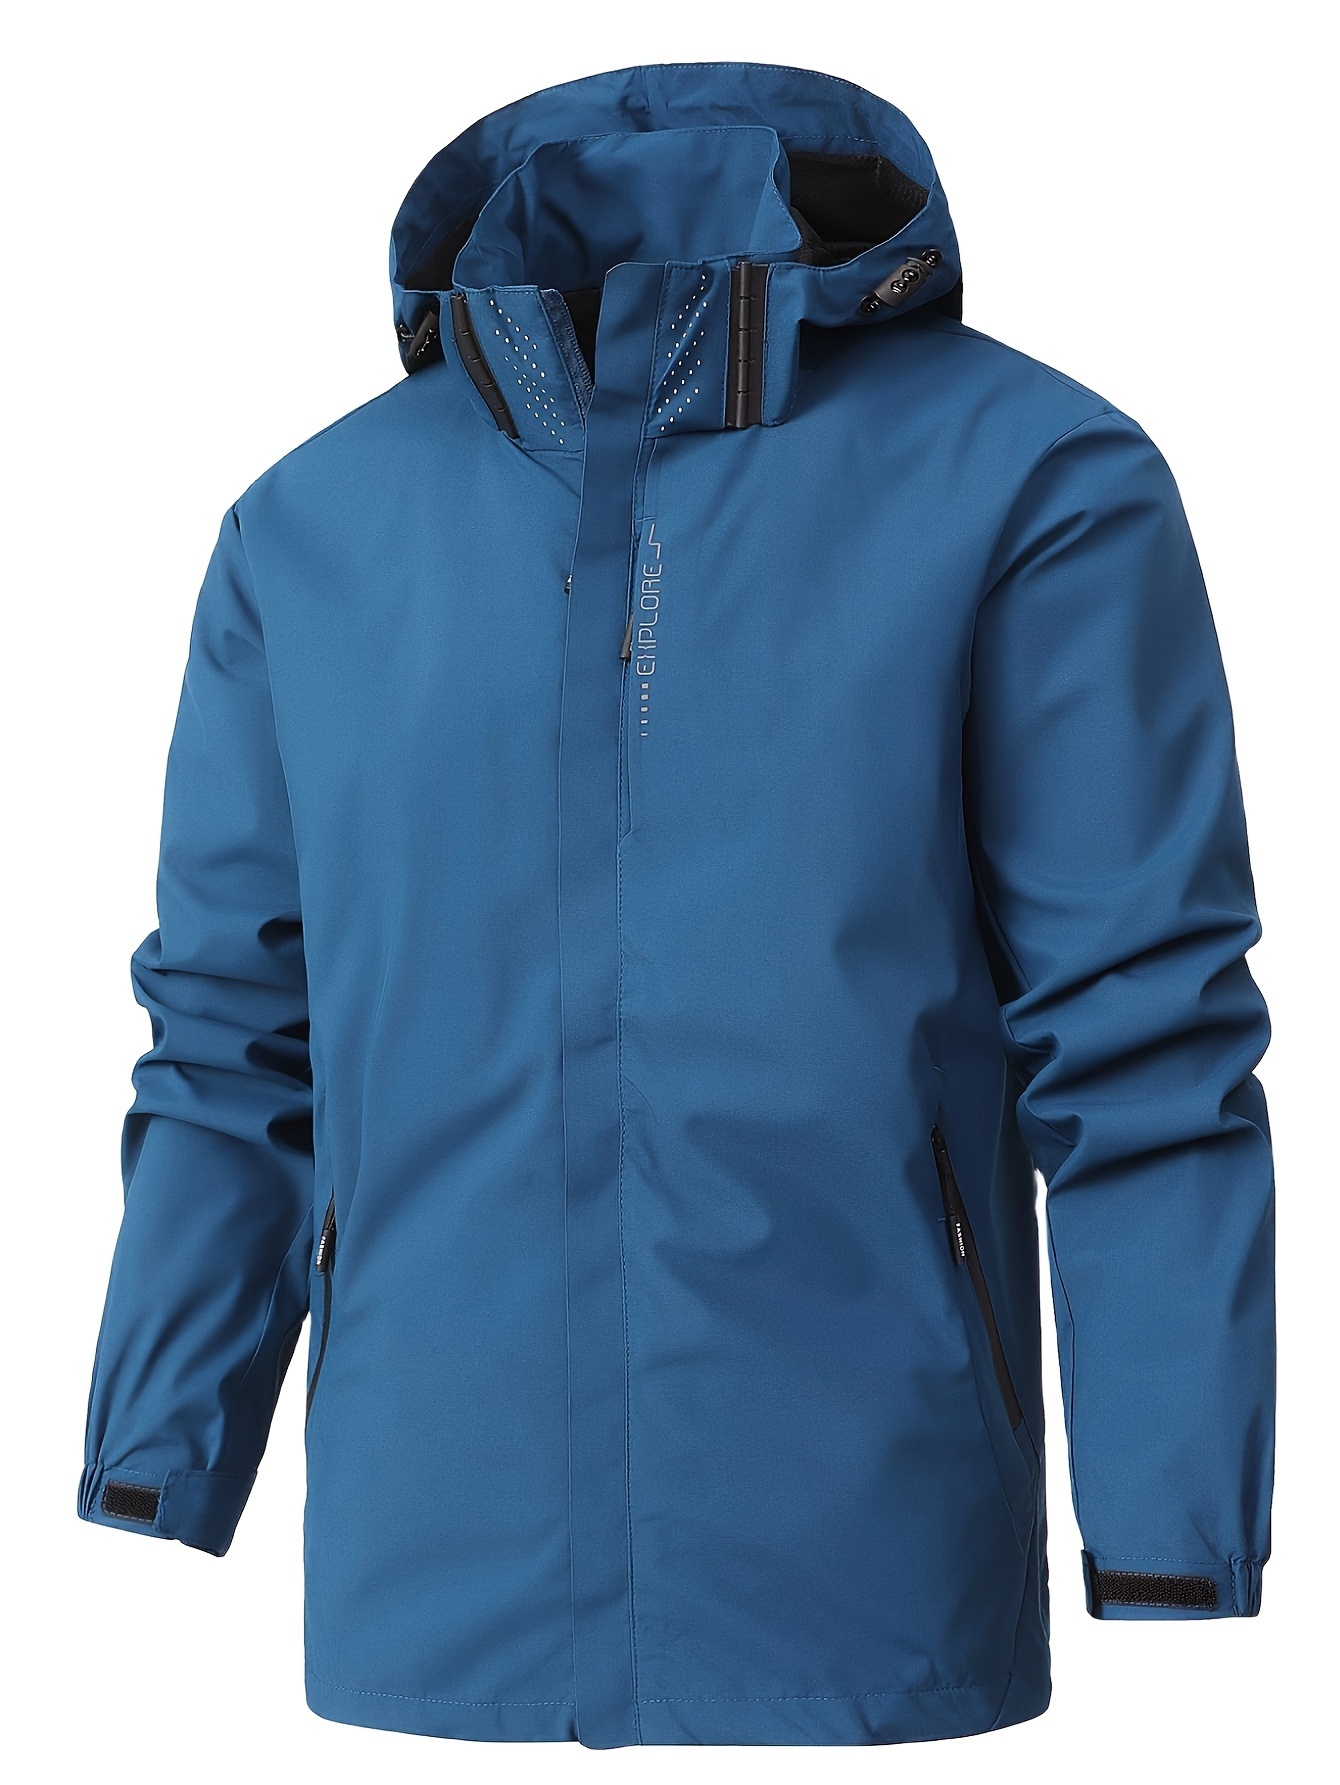 GIISAM Mens Rain Jacket Waterproof with Hood Lightweight Outdoor Travel  Hiking R